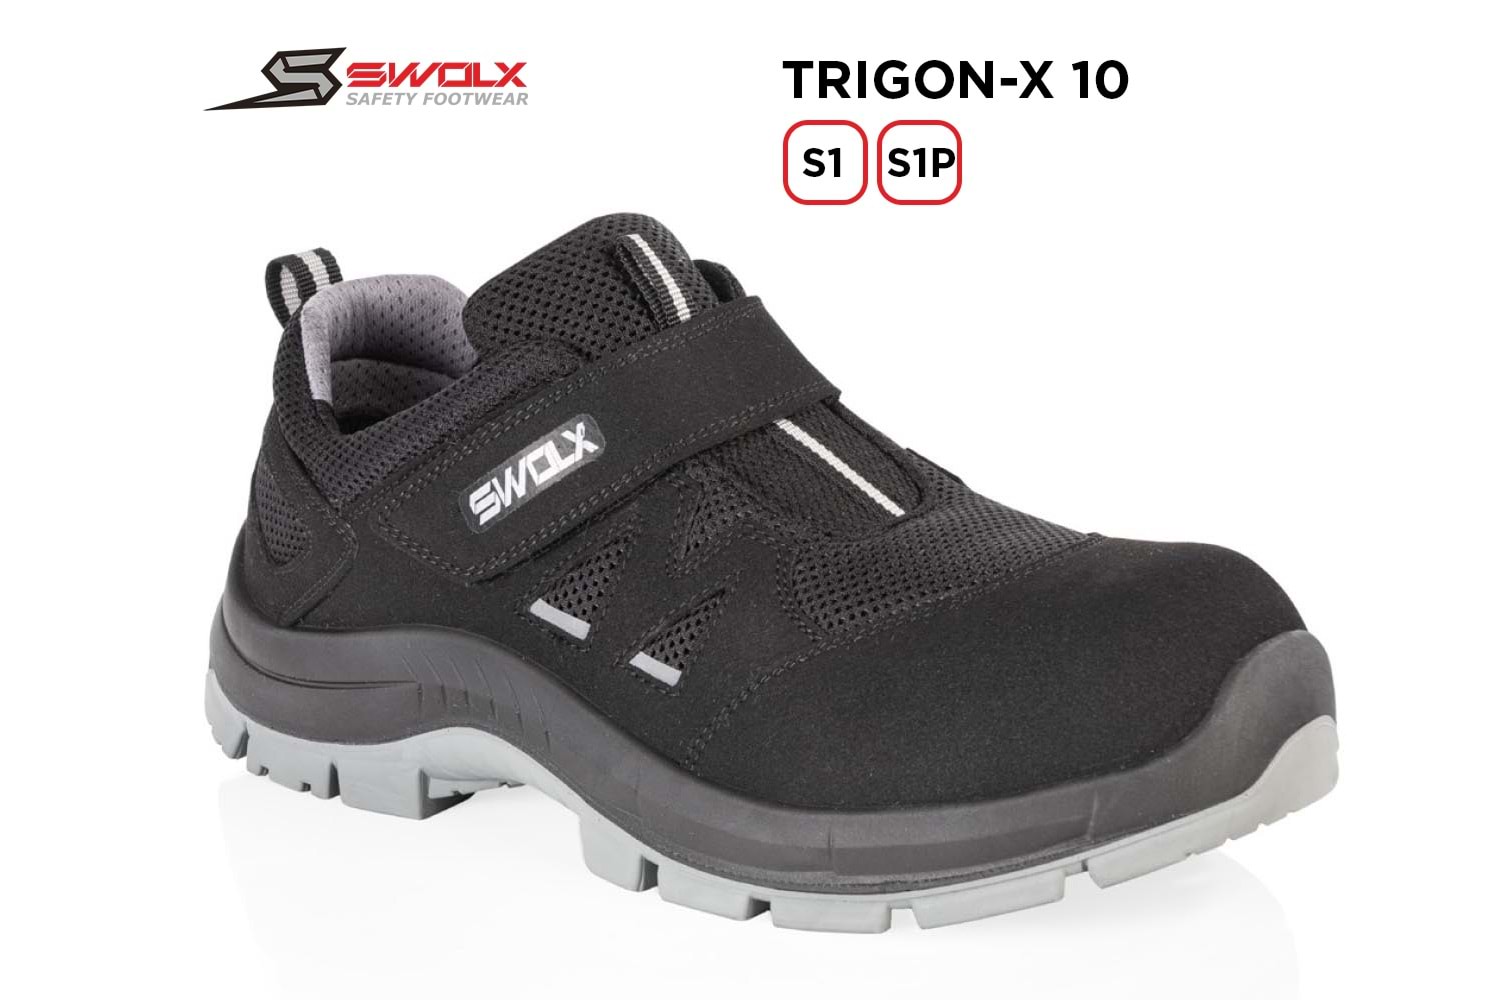 Swolx İş Ayakkabısı - Trigon-X 10 S1P (Trigon-x 110 S1P) - 40